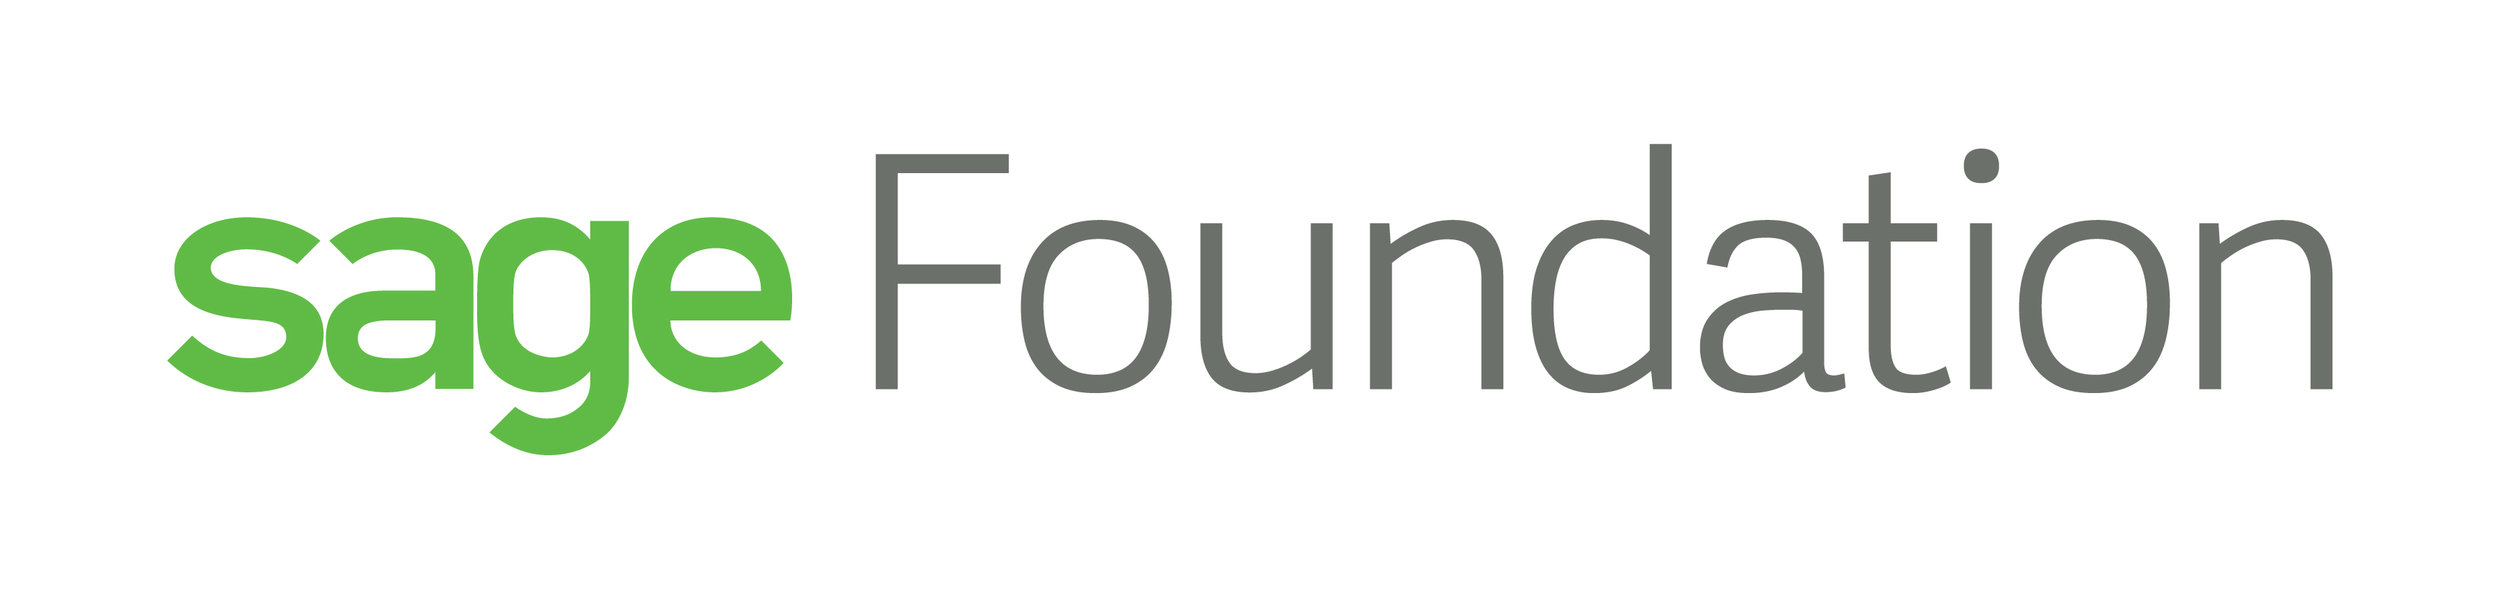 Sage_Foundation_logo.jpg